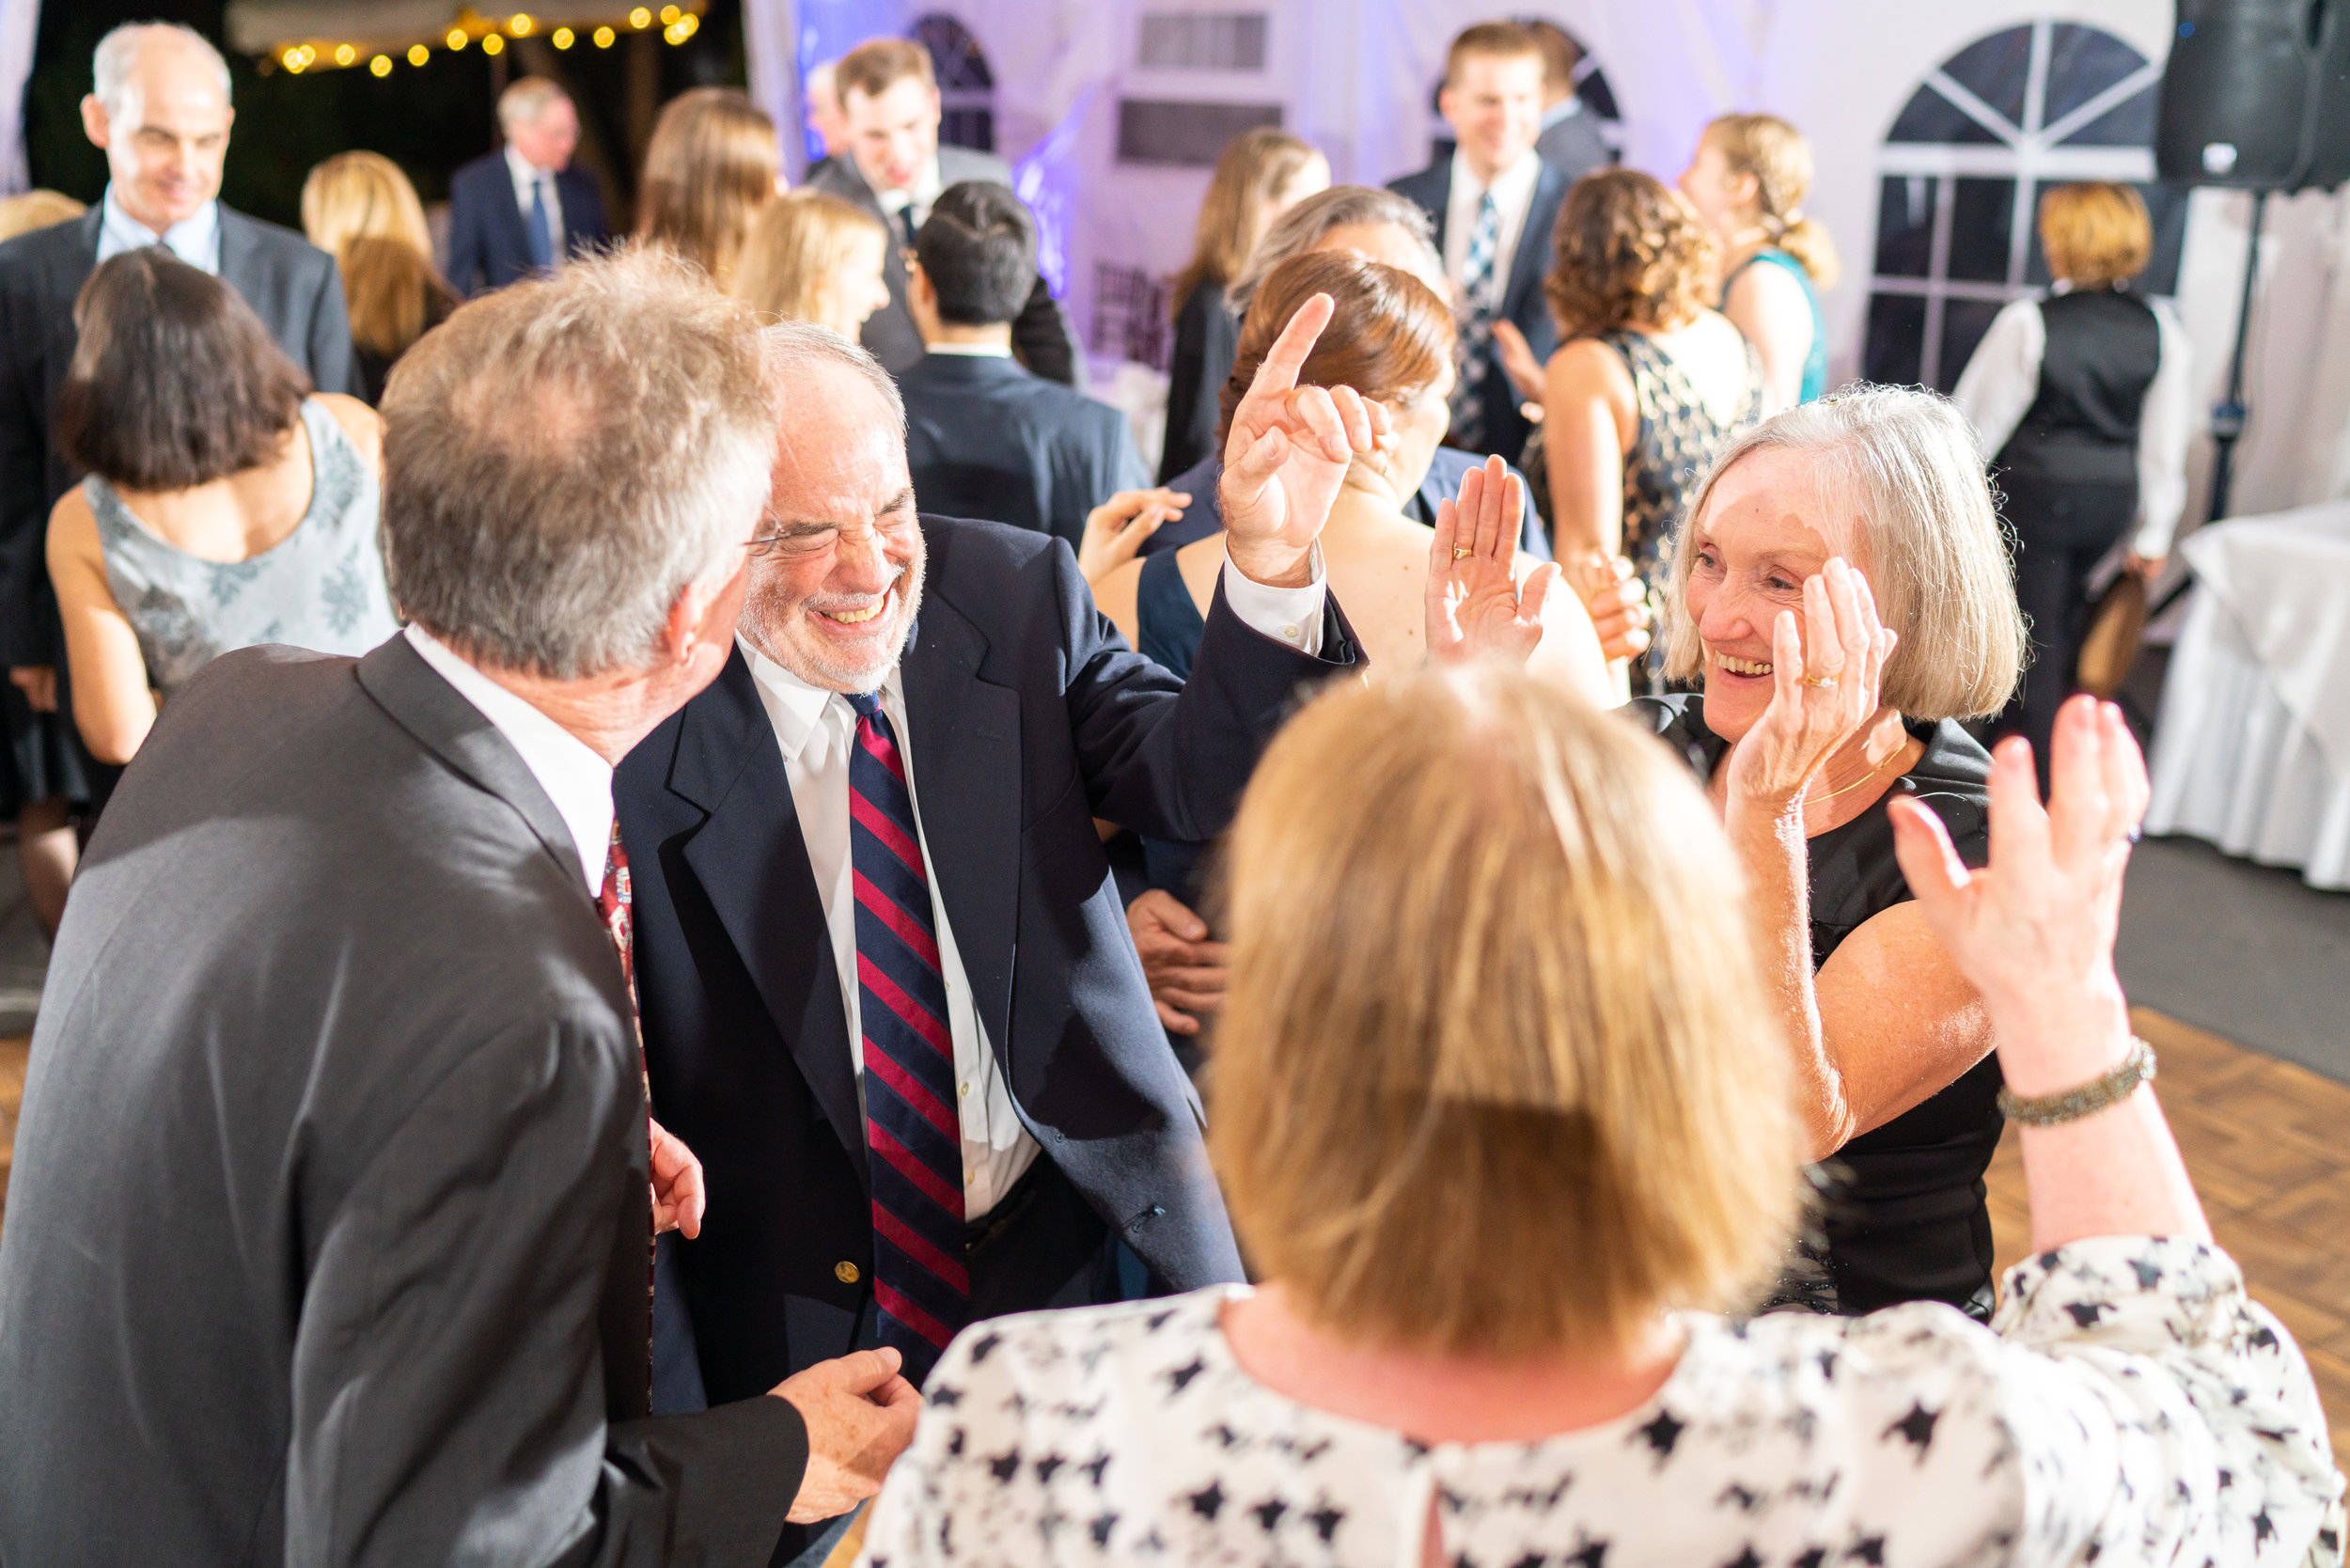 Family dancing during wedding reception at Elkridge Furnace Inn